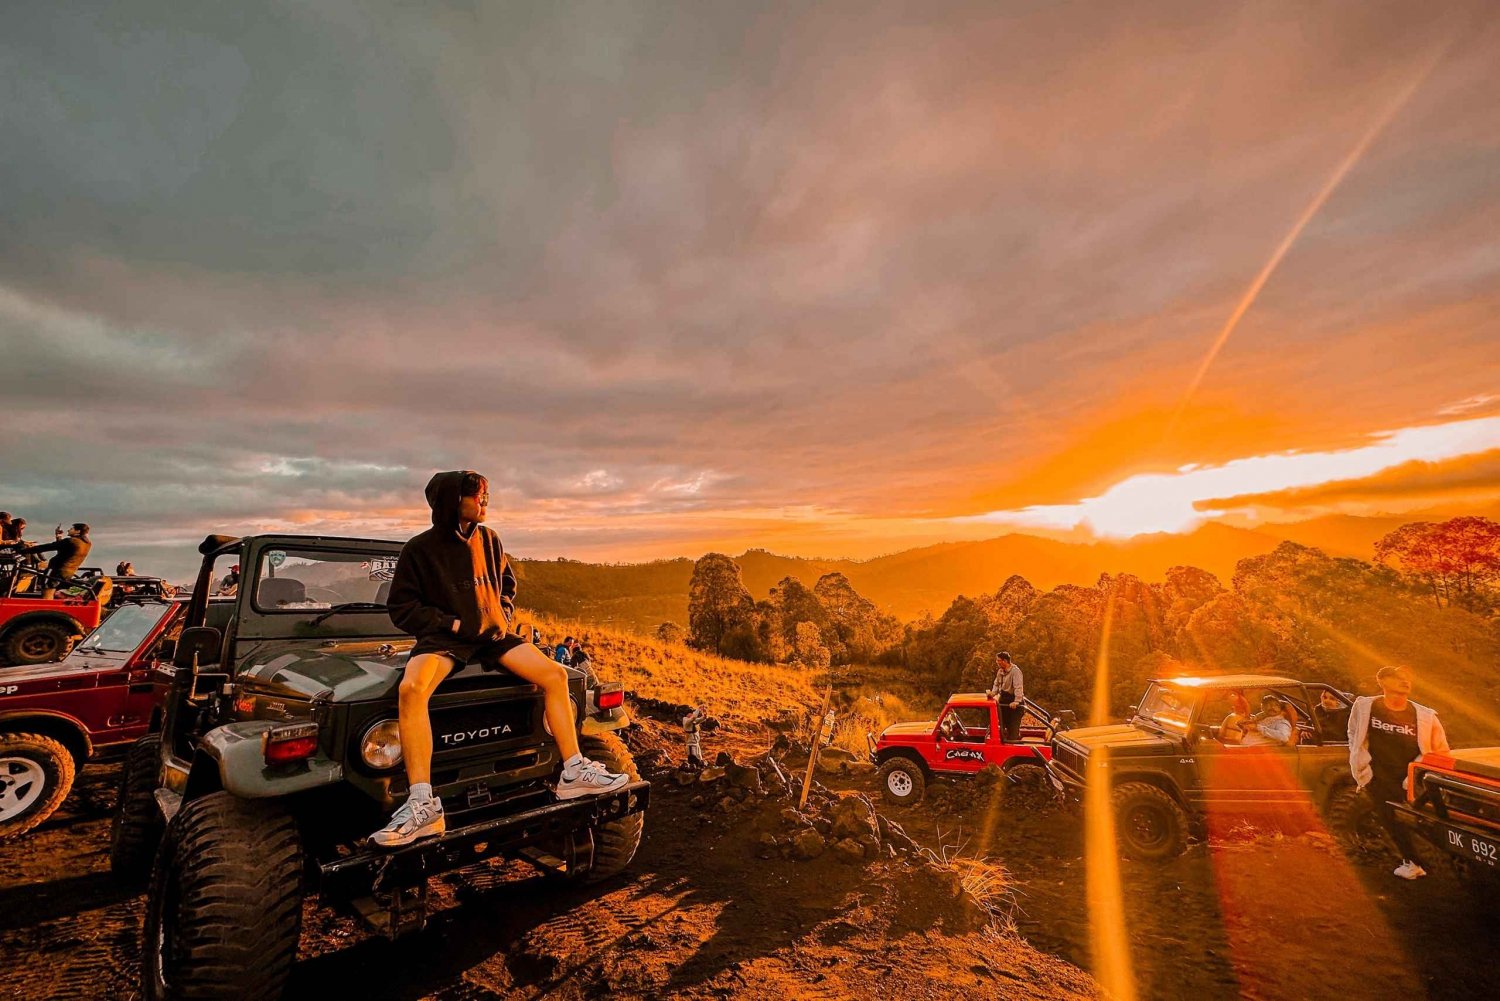 Bali: Mount Batur Jeep Sonnenaufgang - All Inclusive Tour